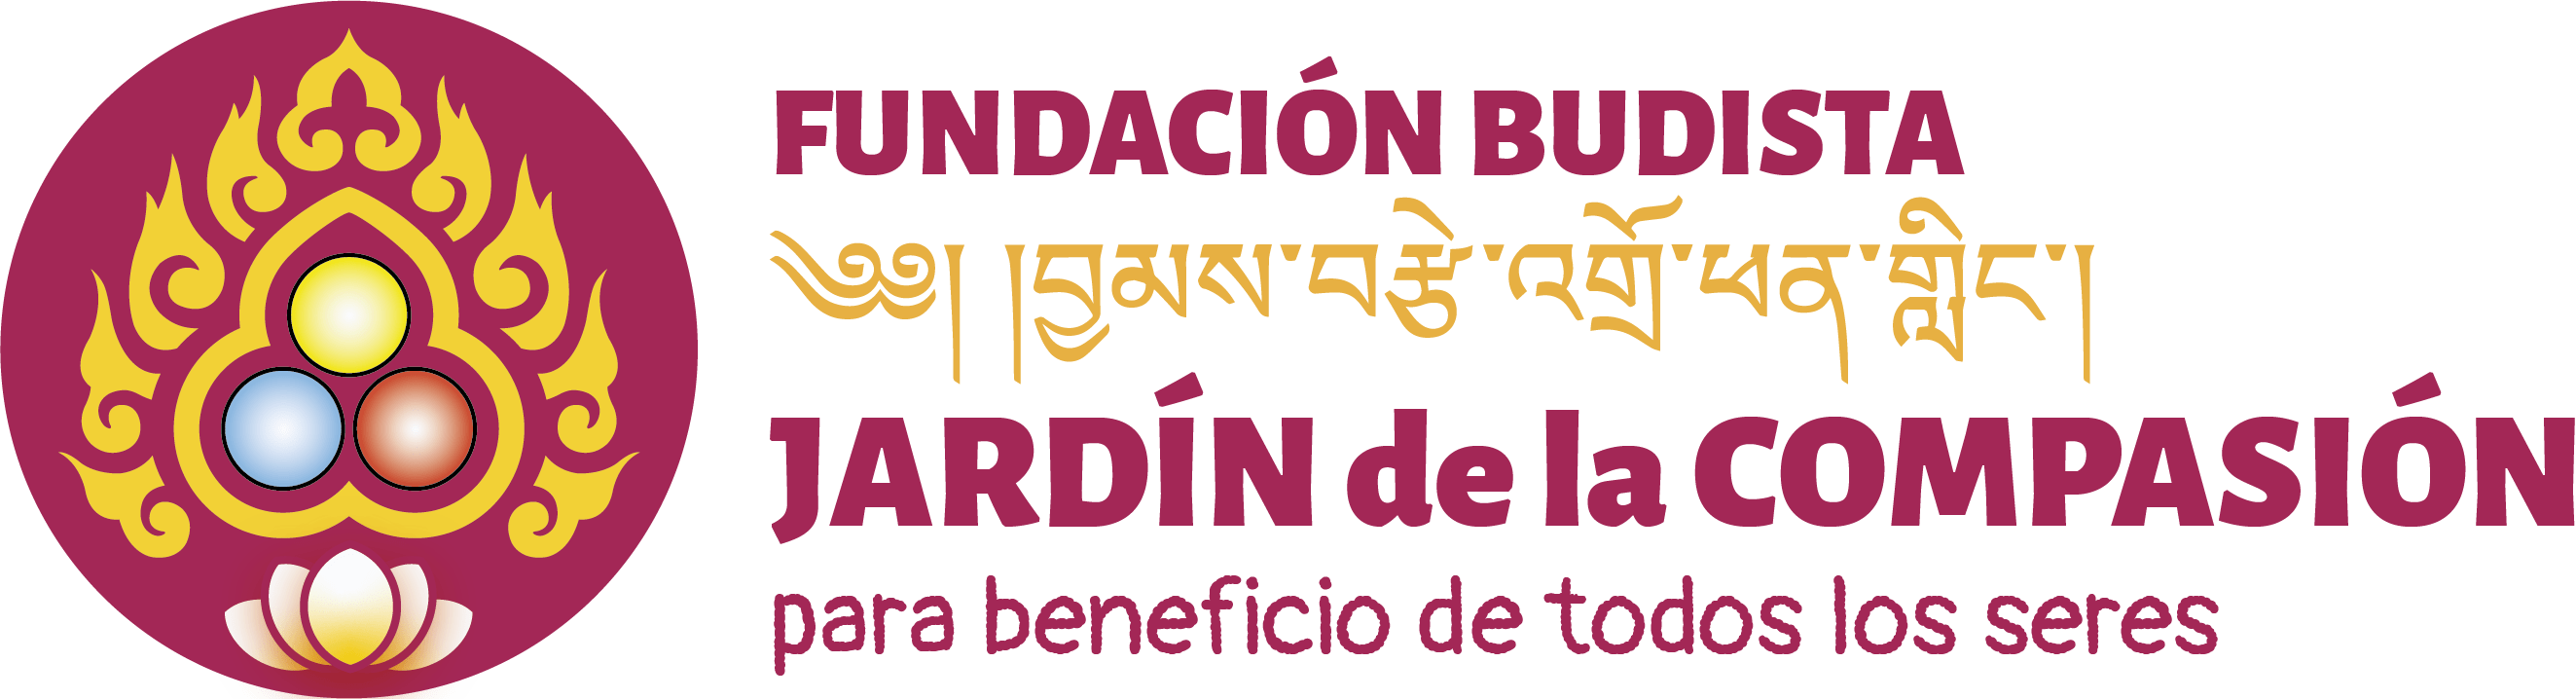 Logo fundación budista